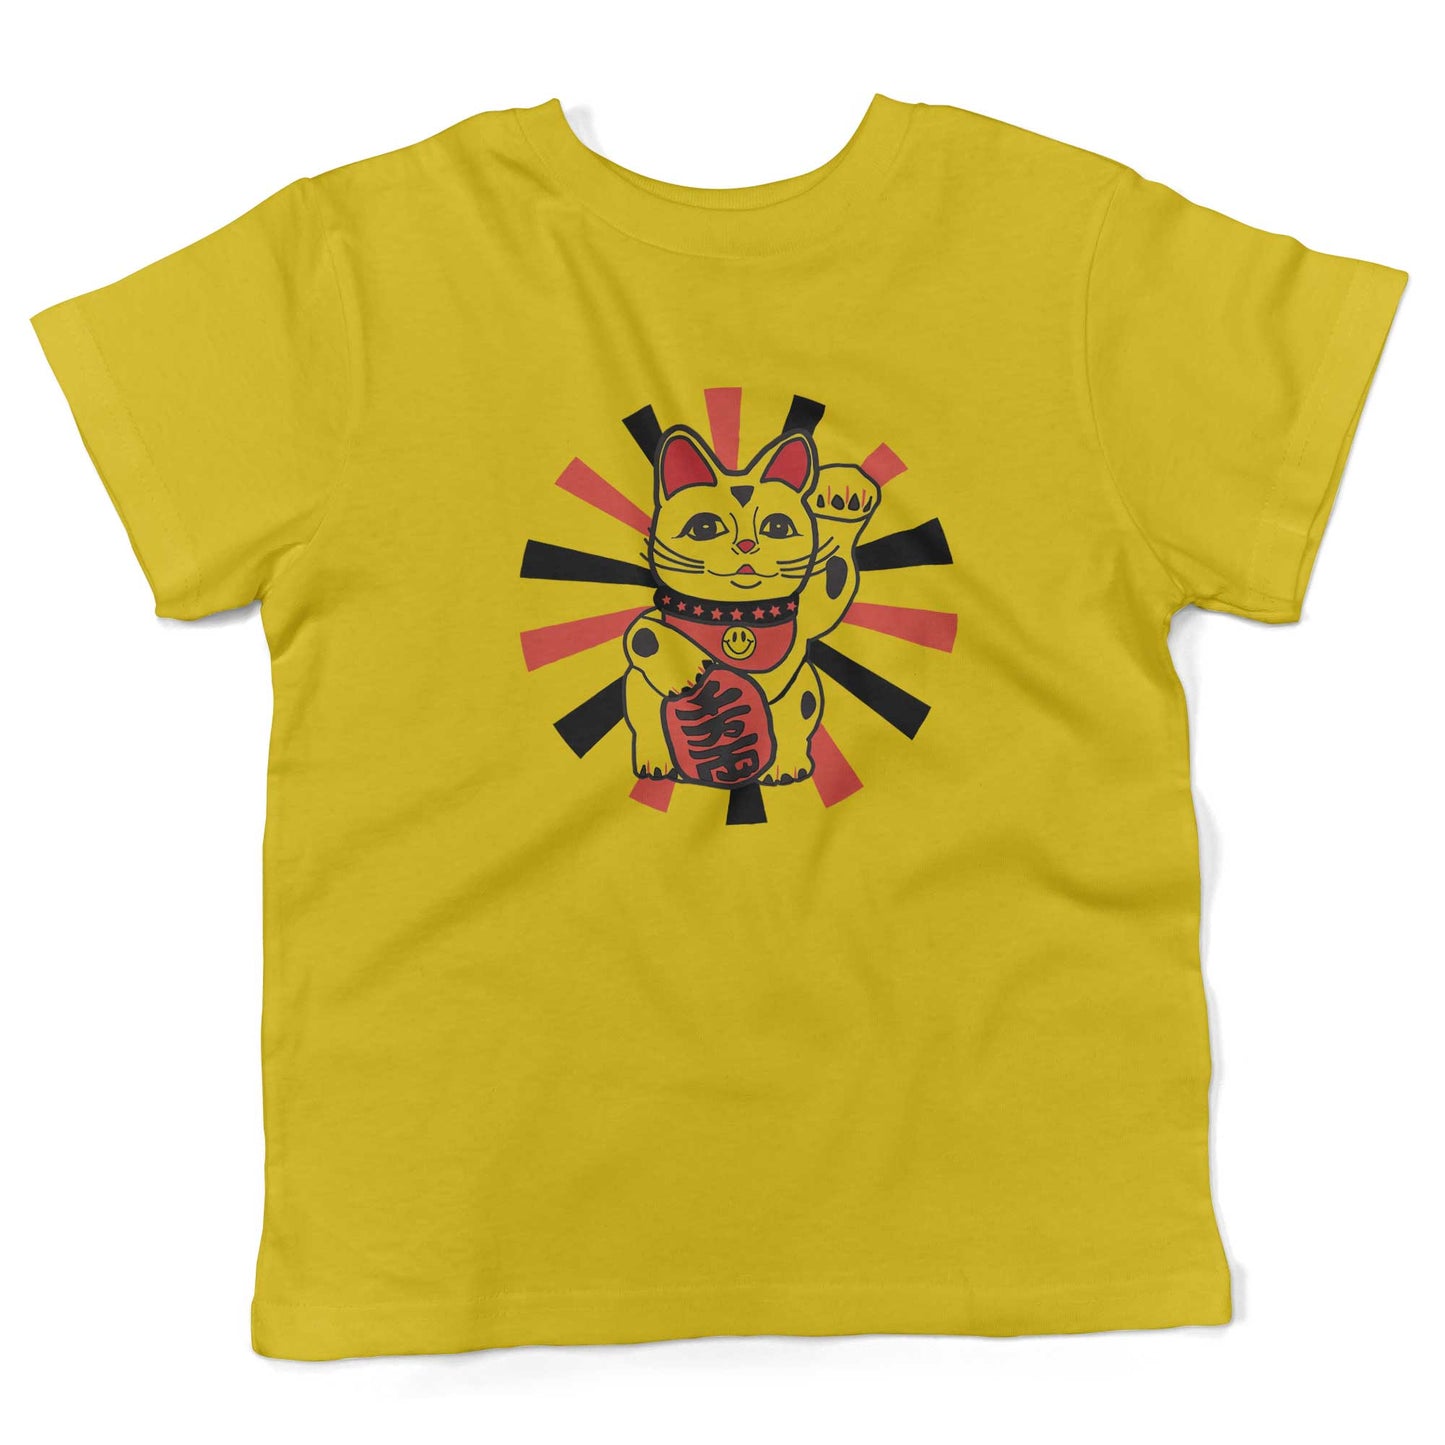 Japanese Lucky Cat Toddler Shirt-Sunshine Yellow-2T